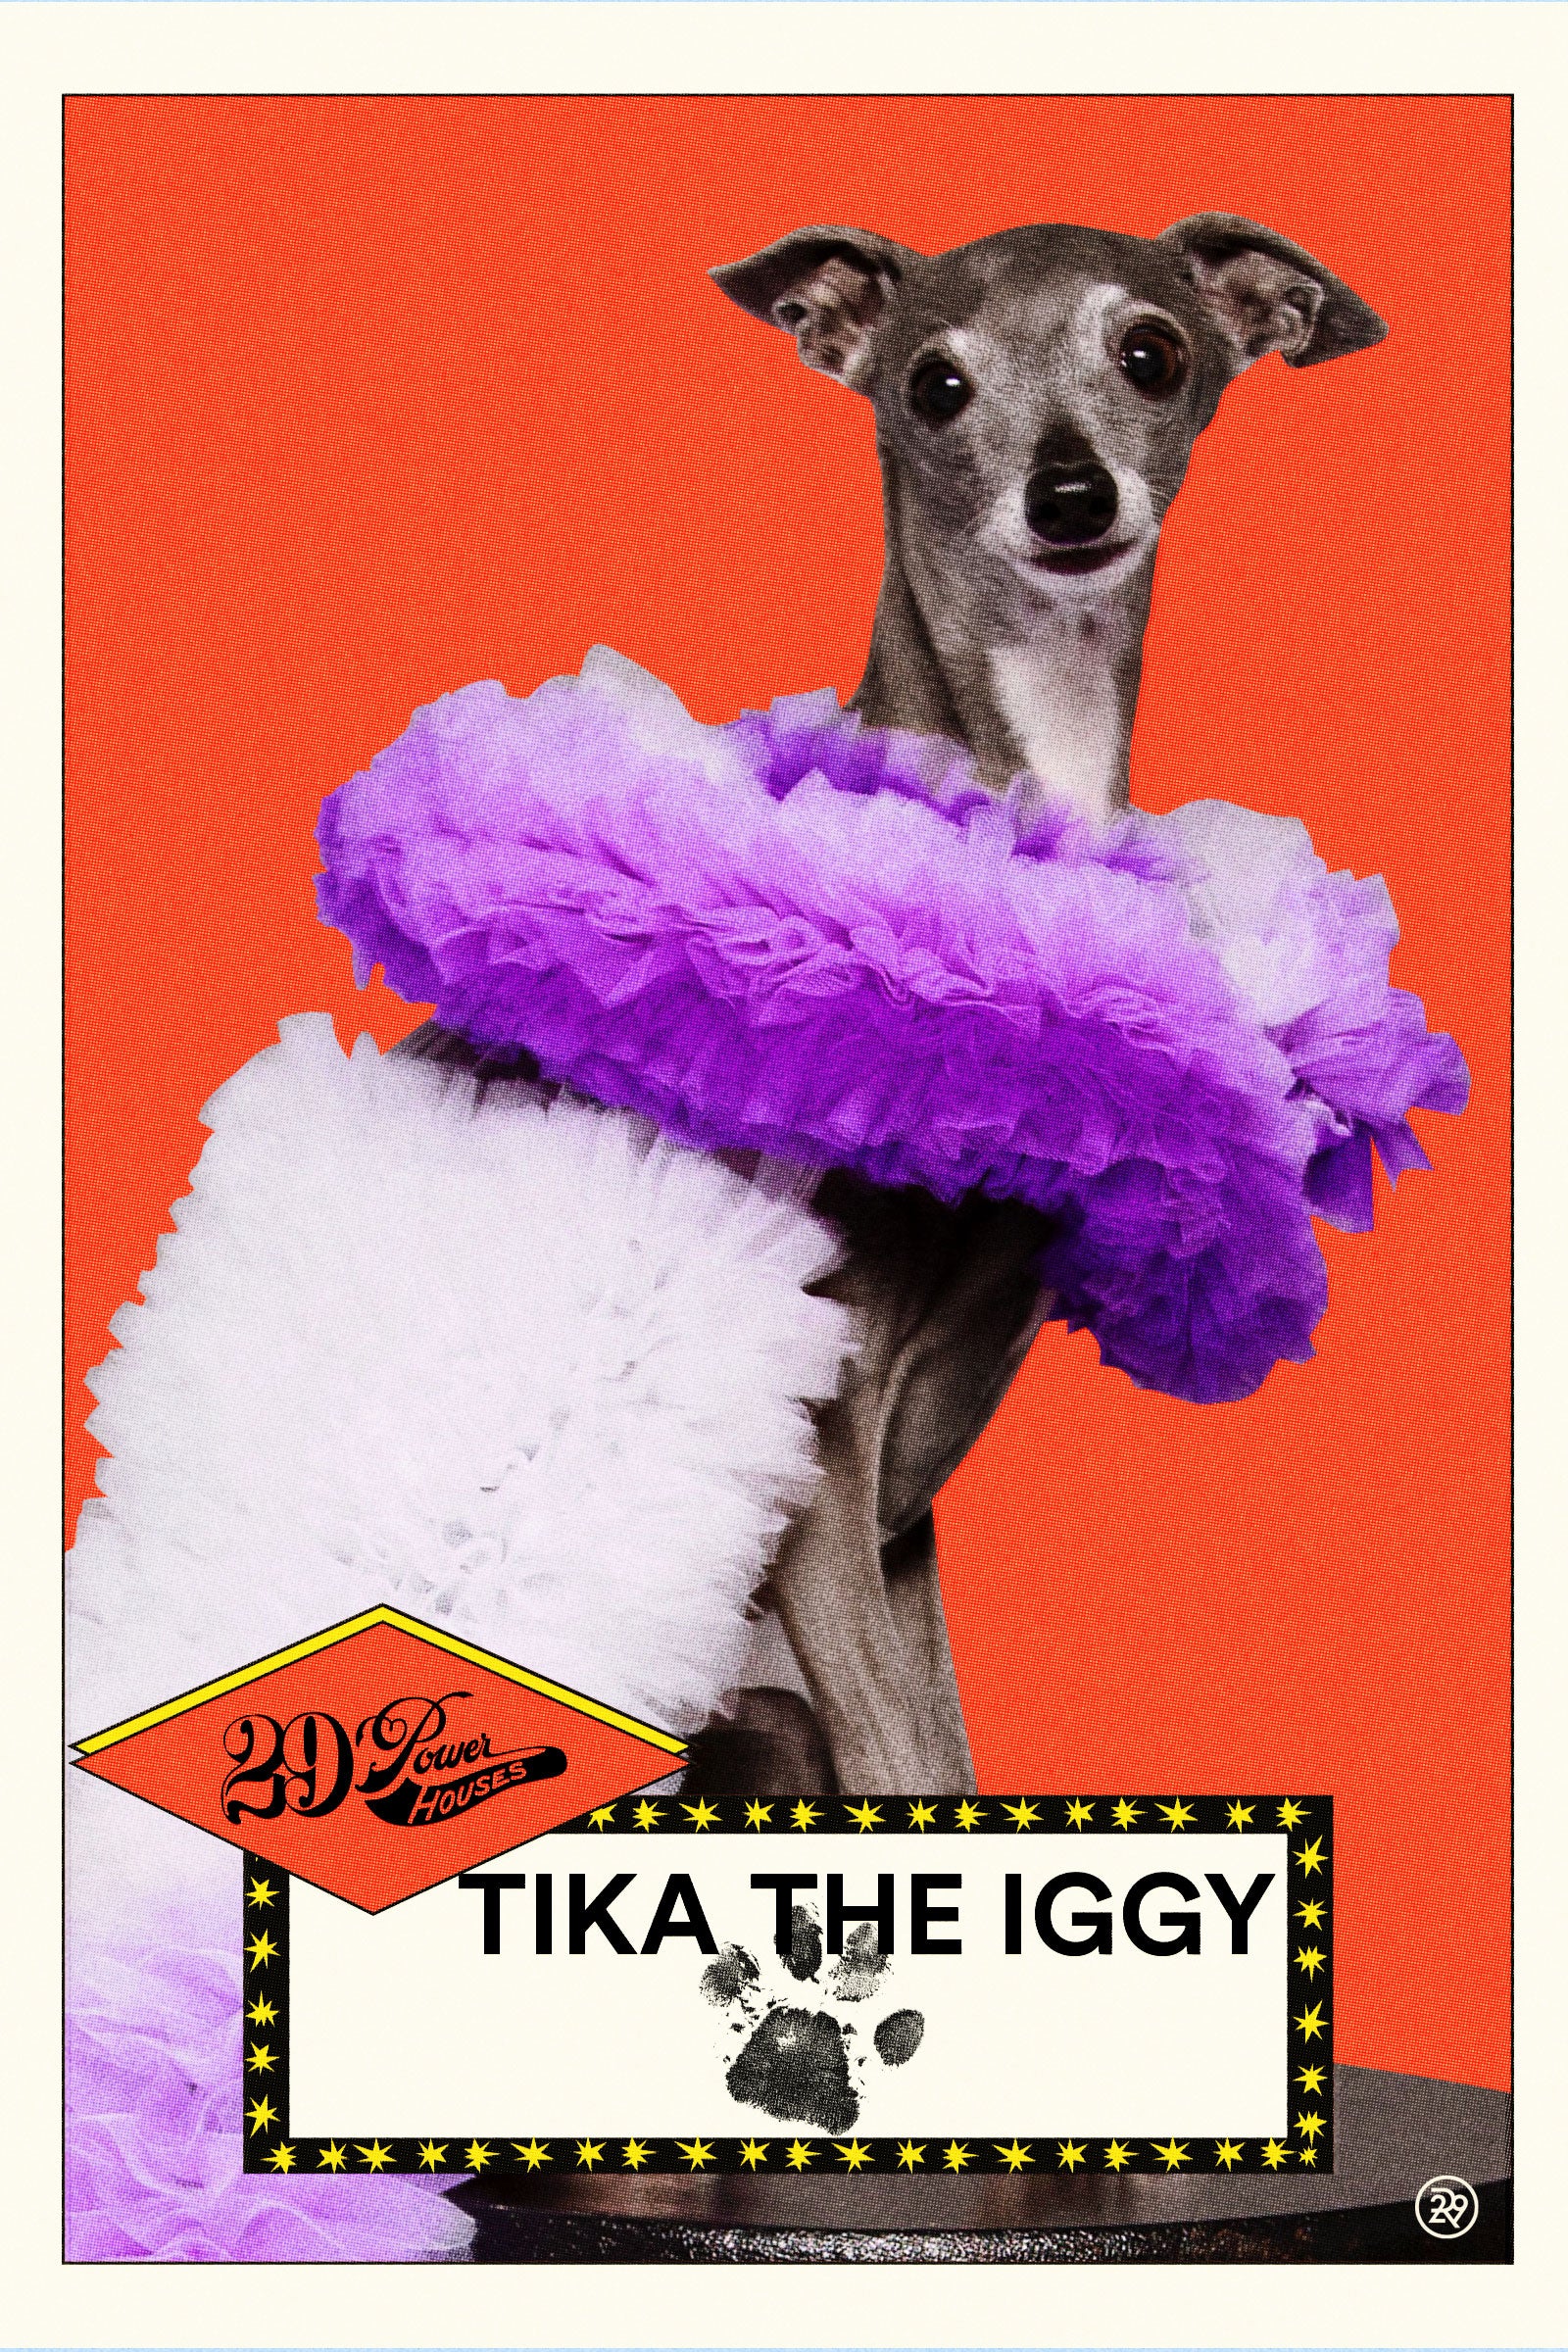 An illustration of Tika The Iggy